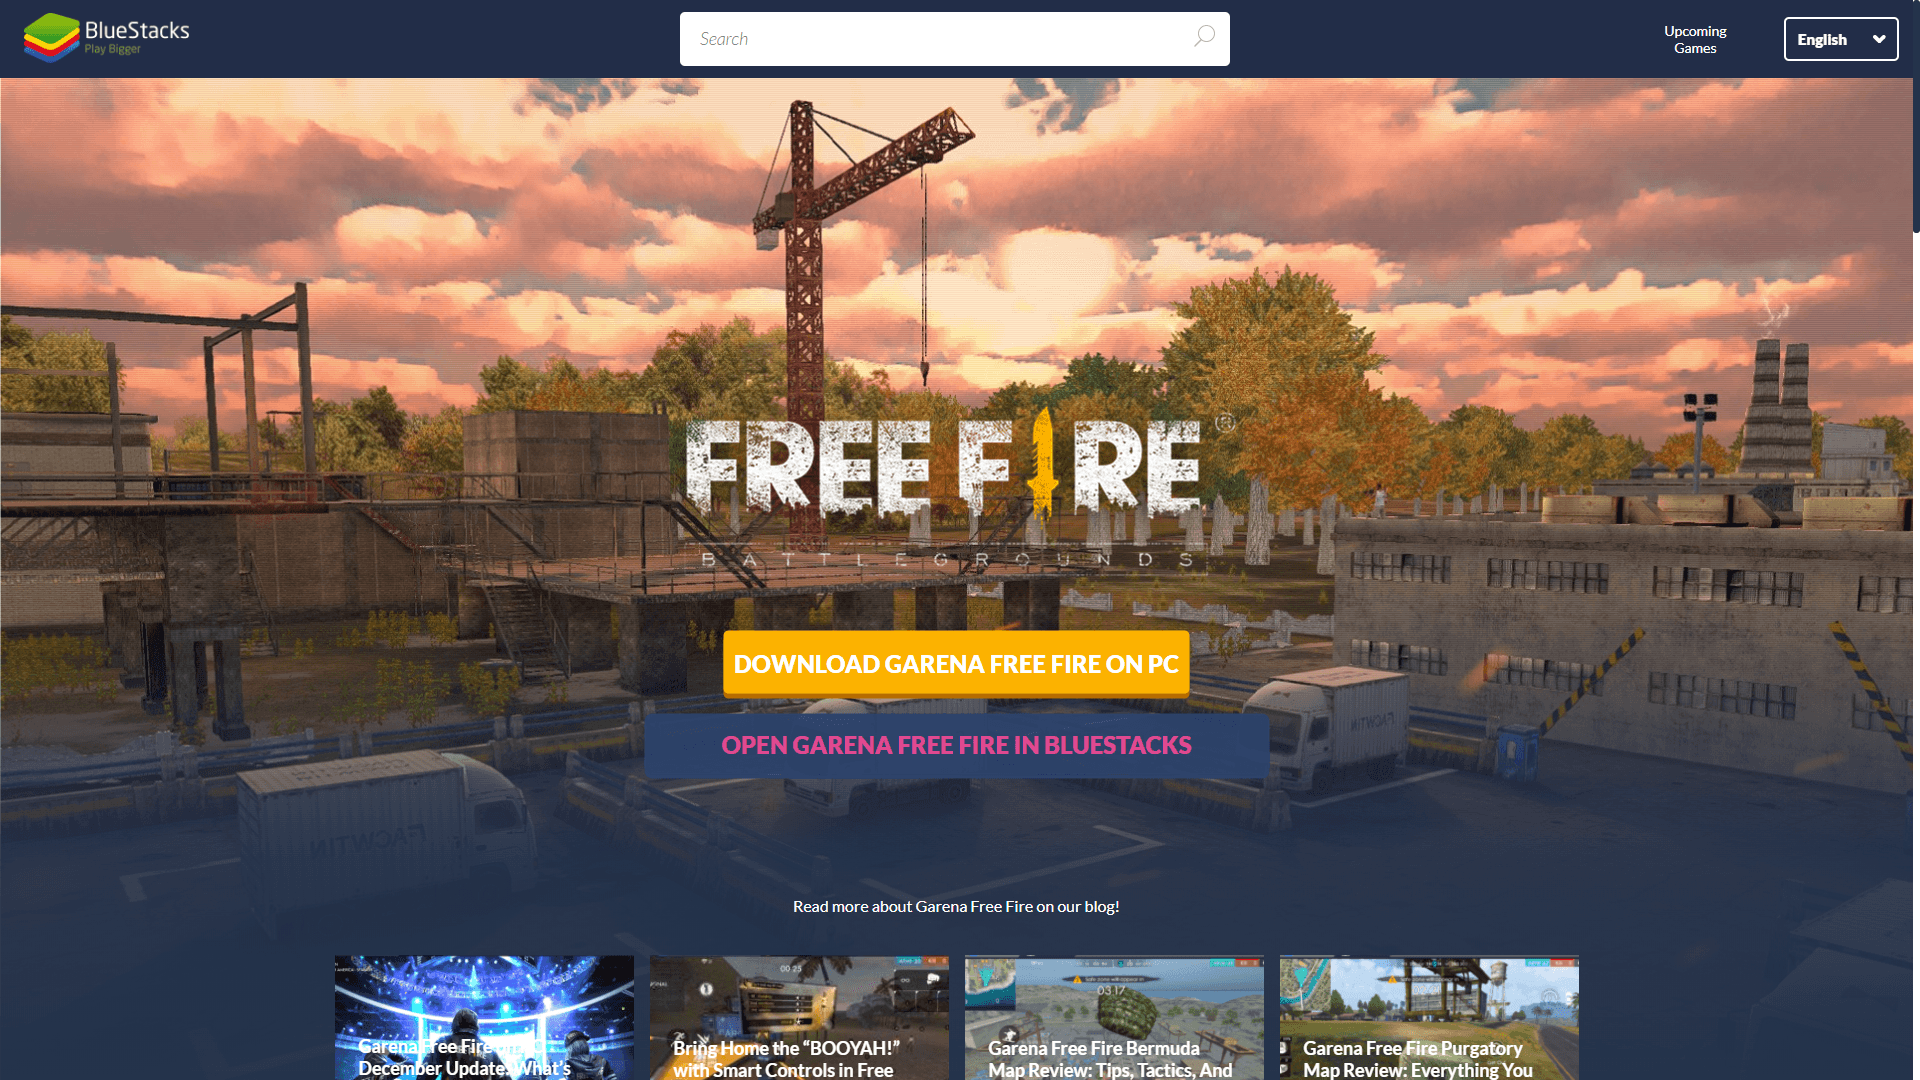 Garena Free Fire Battlegrounds PC: How To Download Garena Free